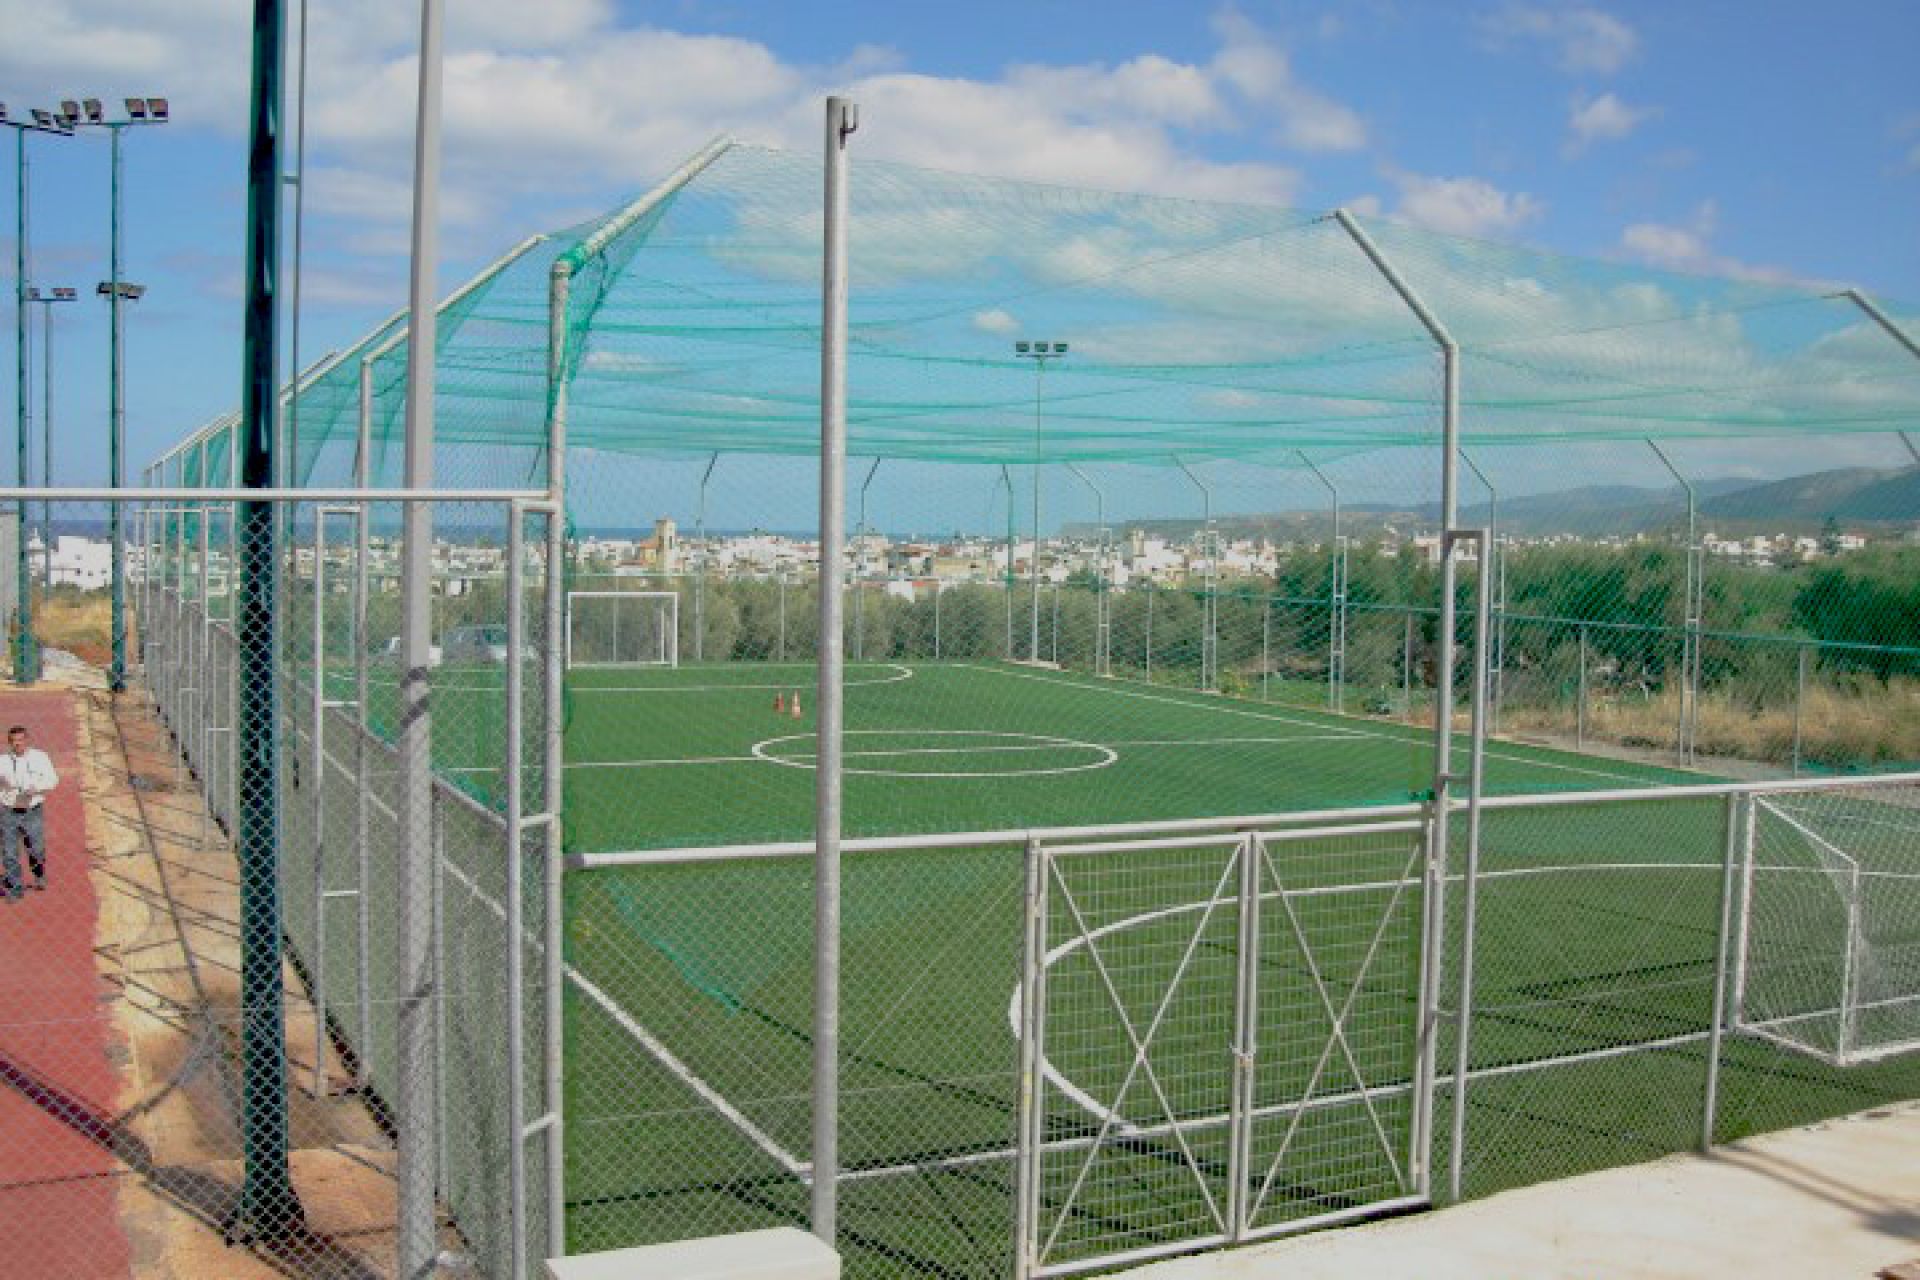 Auxiliary football field